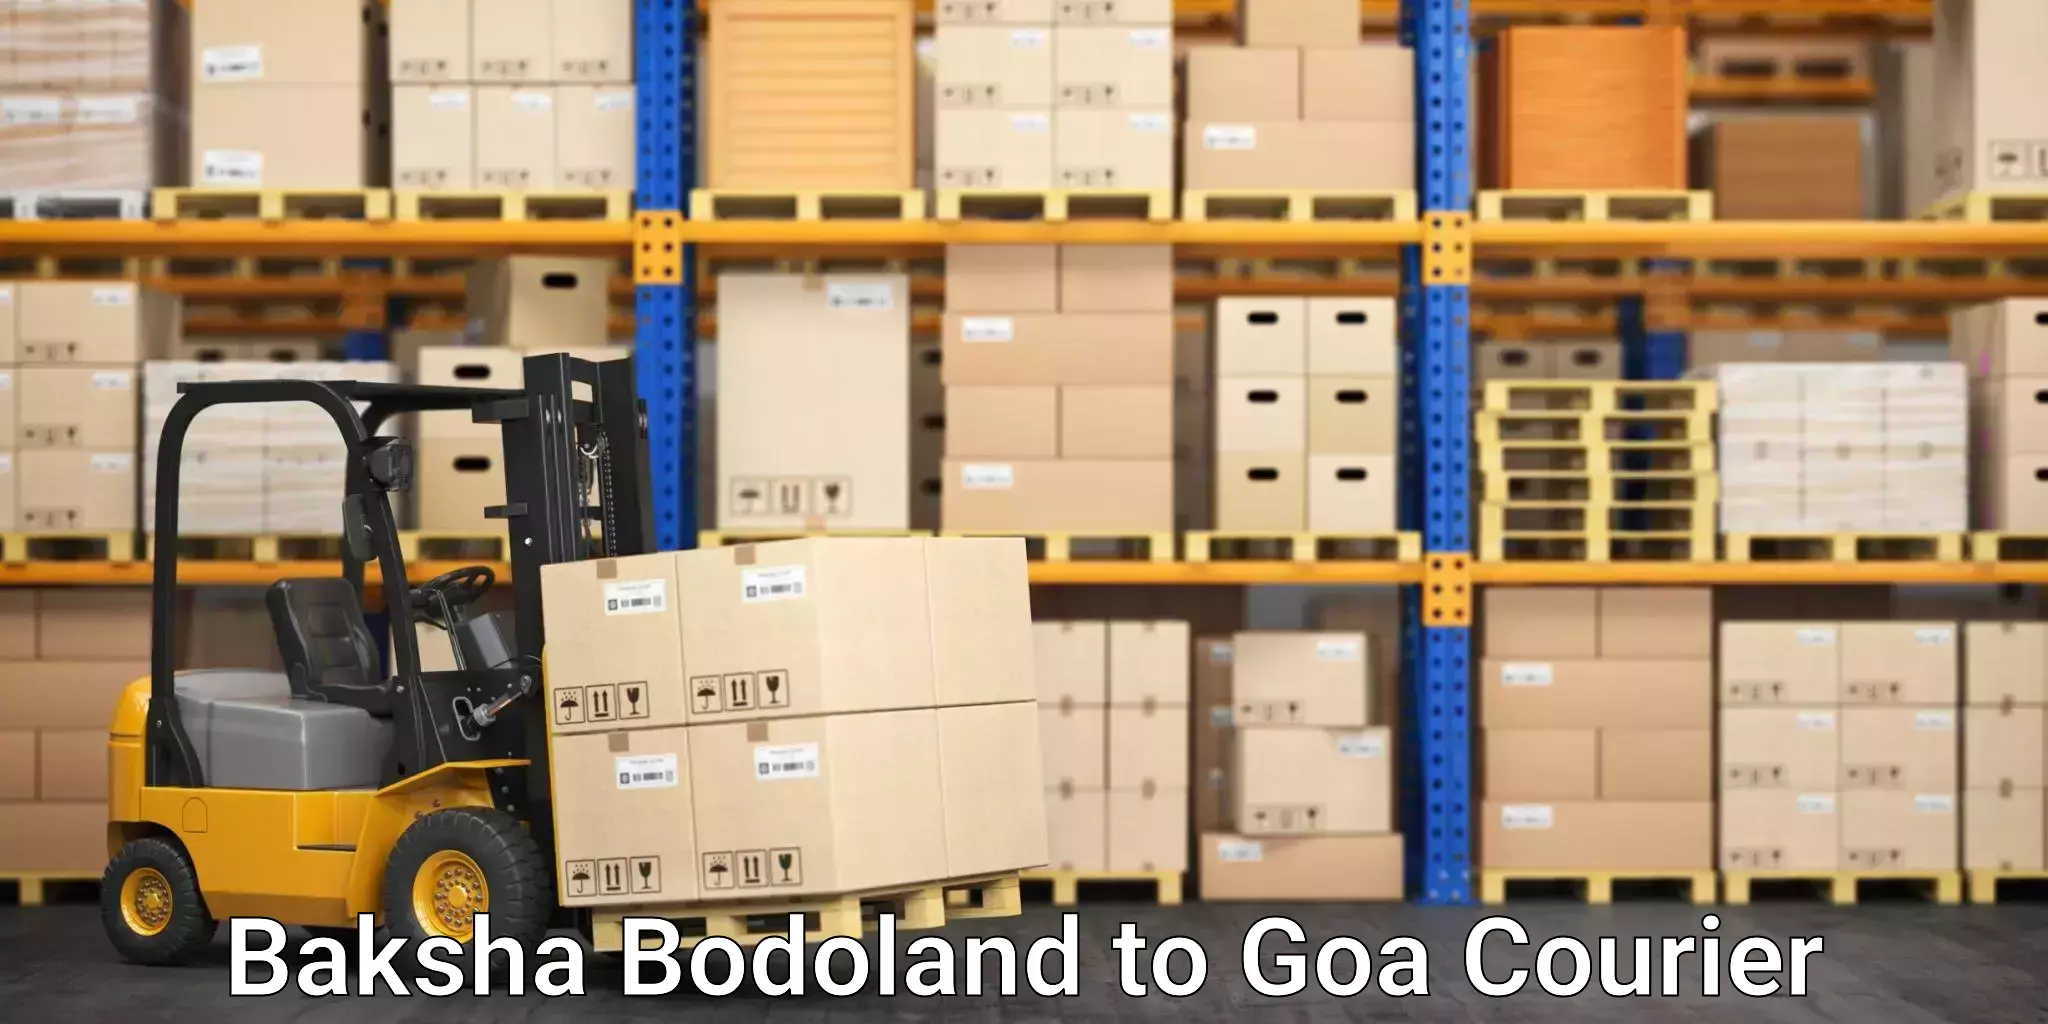 Professional courier handling Baksha Bodoland to Goa